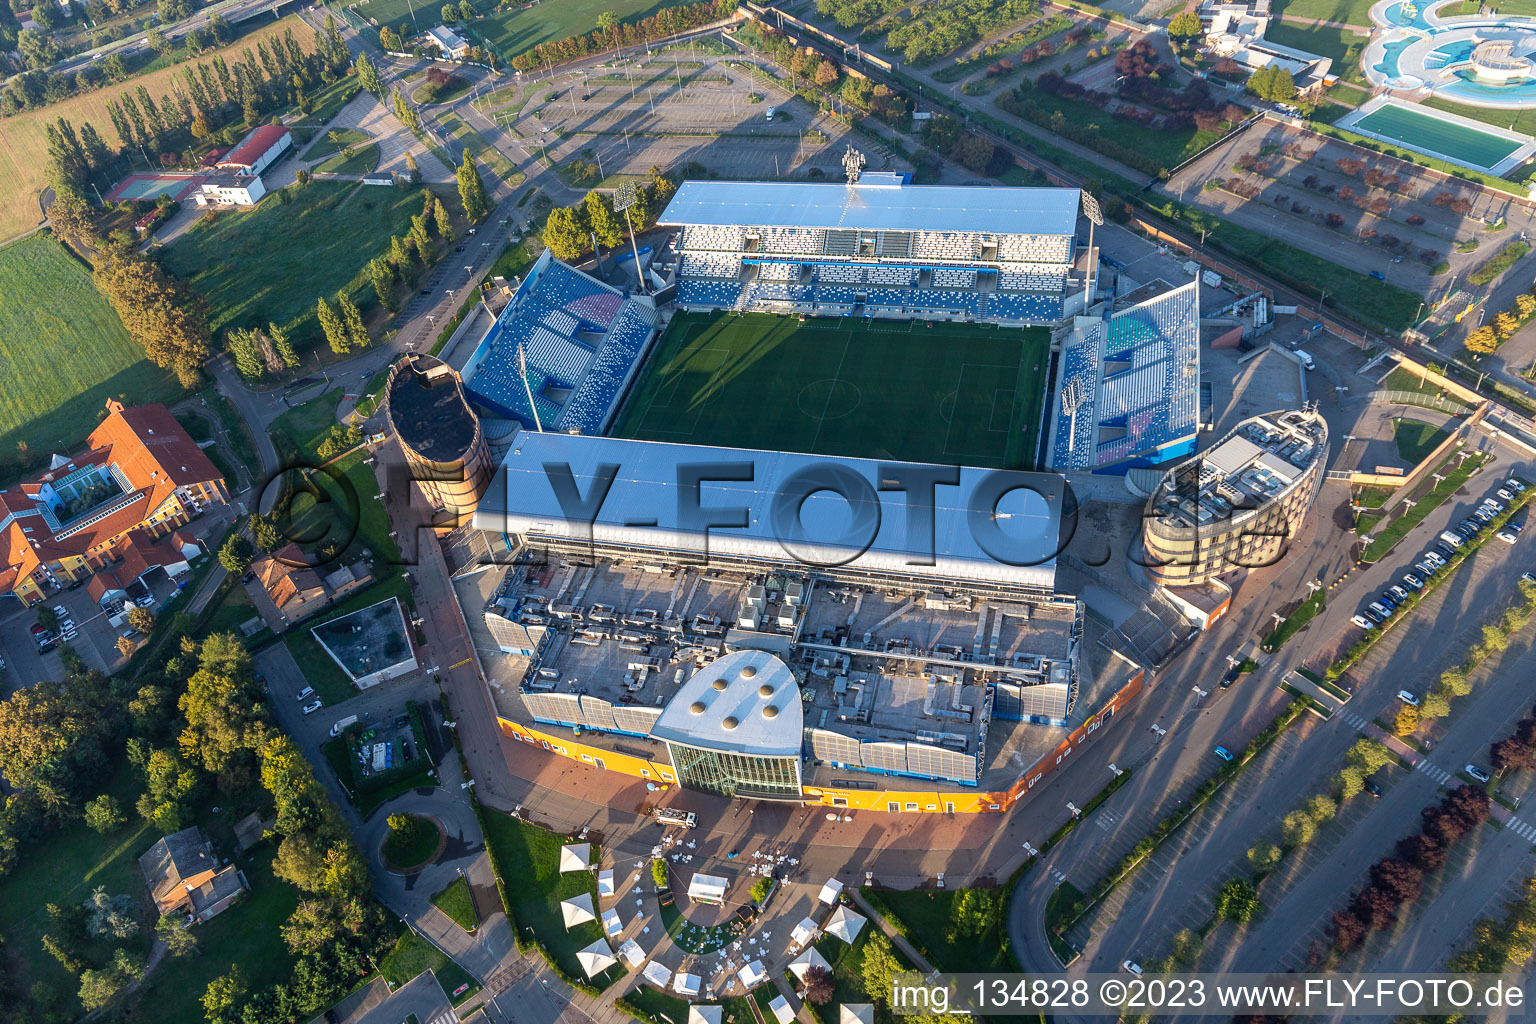 Schrägluftbild von MAPEI Stadium – Città del Tricolore in Reggio nell’Emilia im Bundesland Reggio Emilia, Italien